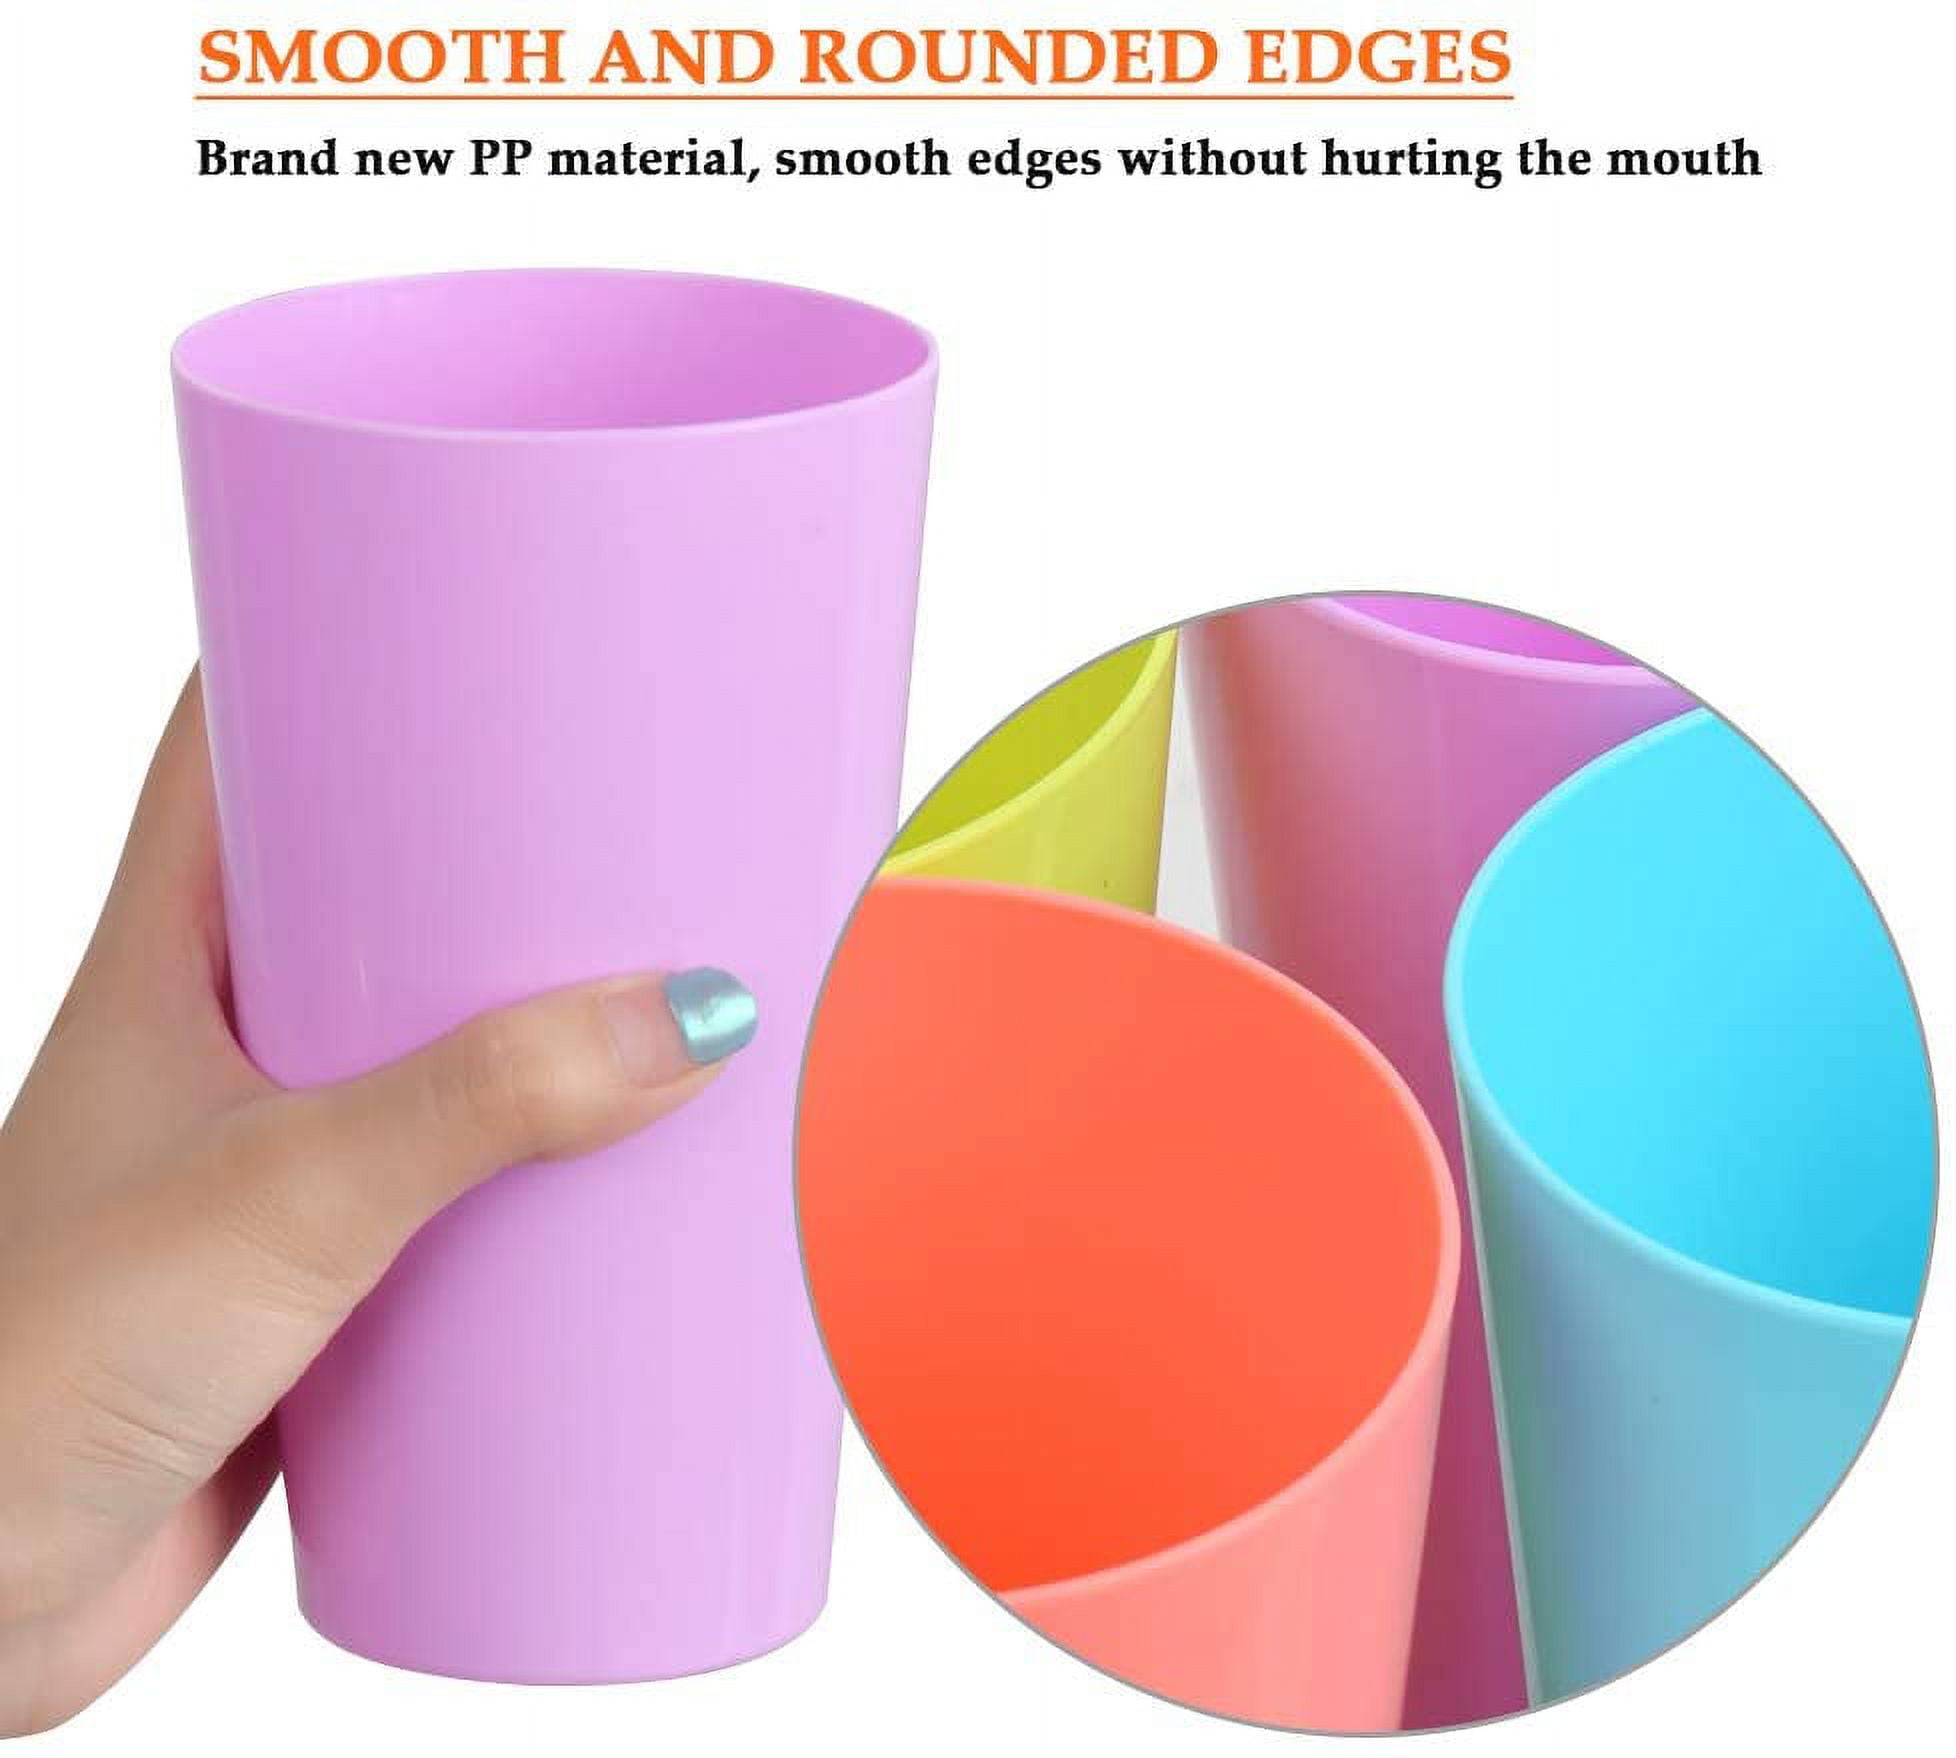 4) Bacardi Plastic Drink Cups - (2) Green, (2) Purple - Turn Color